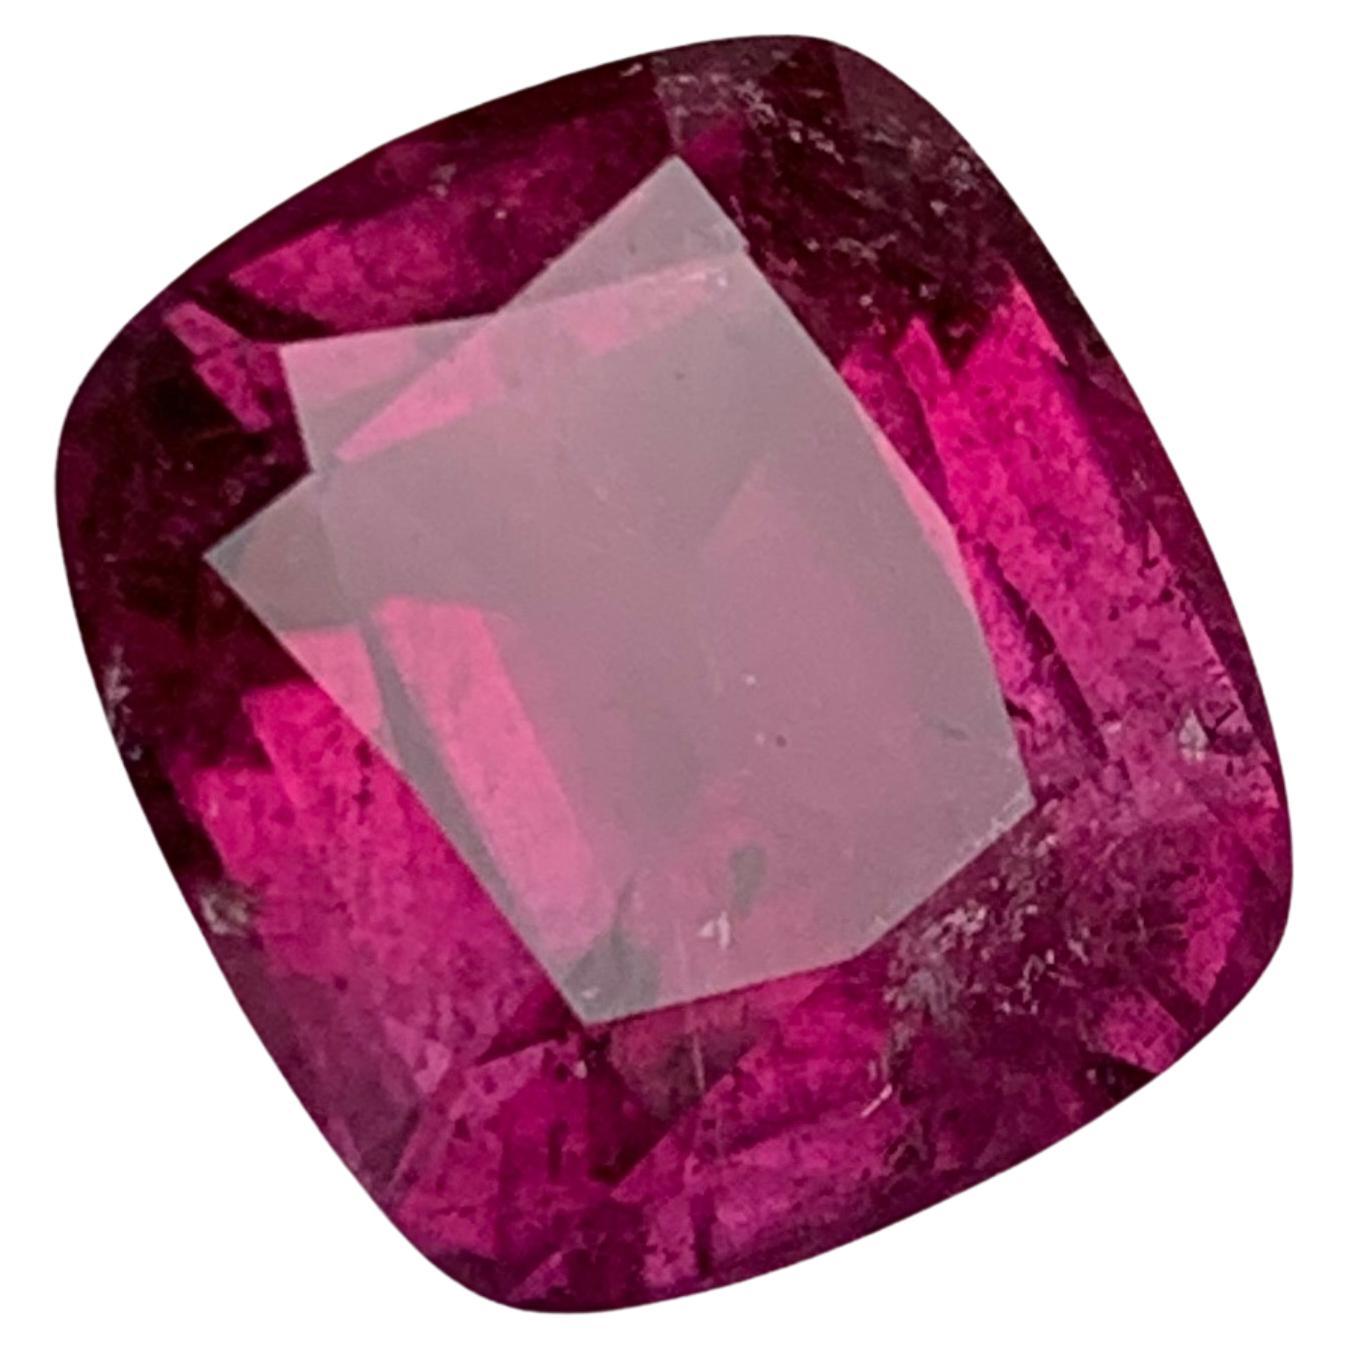 Rare Purplish Pink Natural Rubellite Tourmaline Gemstone, 11.05 Ct Cushion Cut For Sale